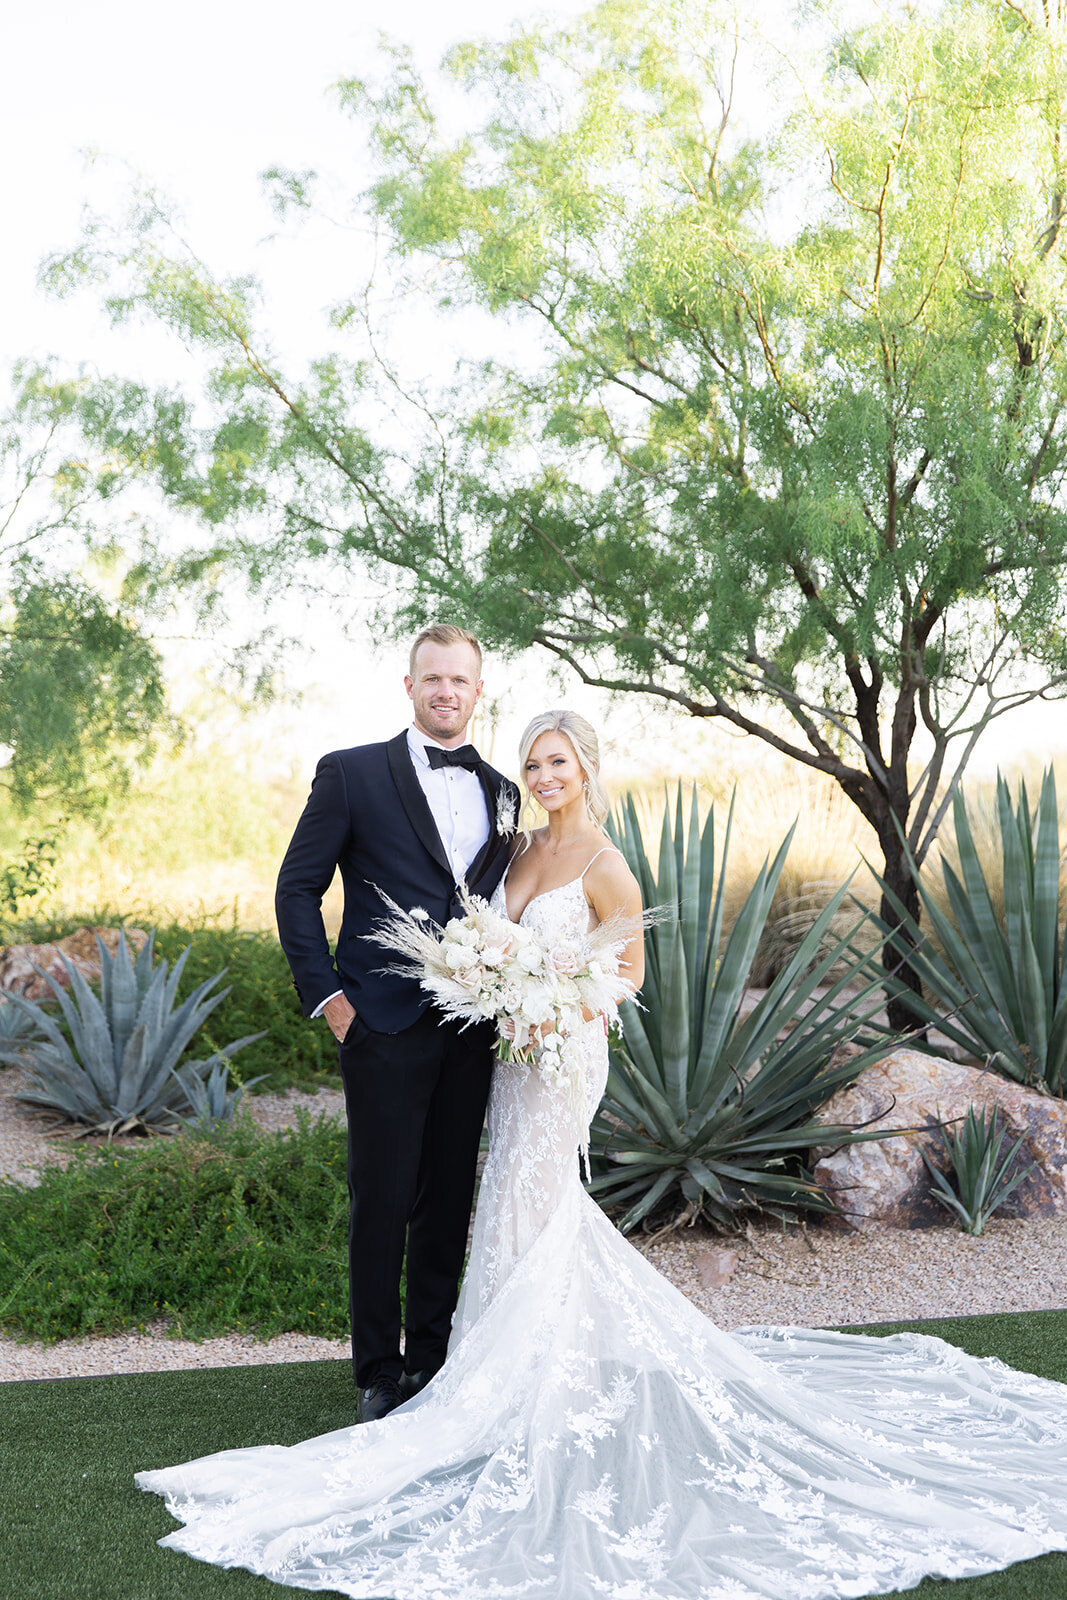 Karlie Colleen Photography - Ashley & Grant Wedding - The Paseo - Phoenix Arizona-666